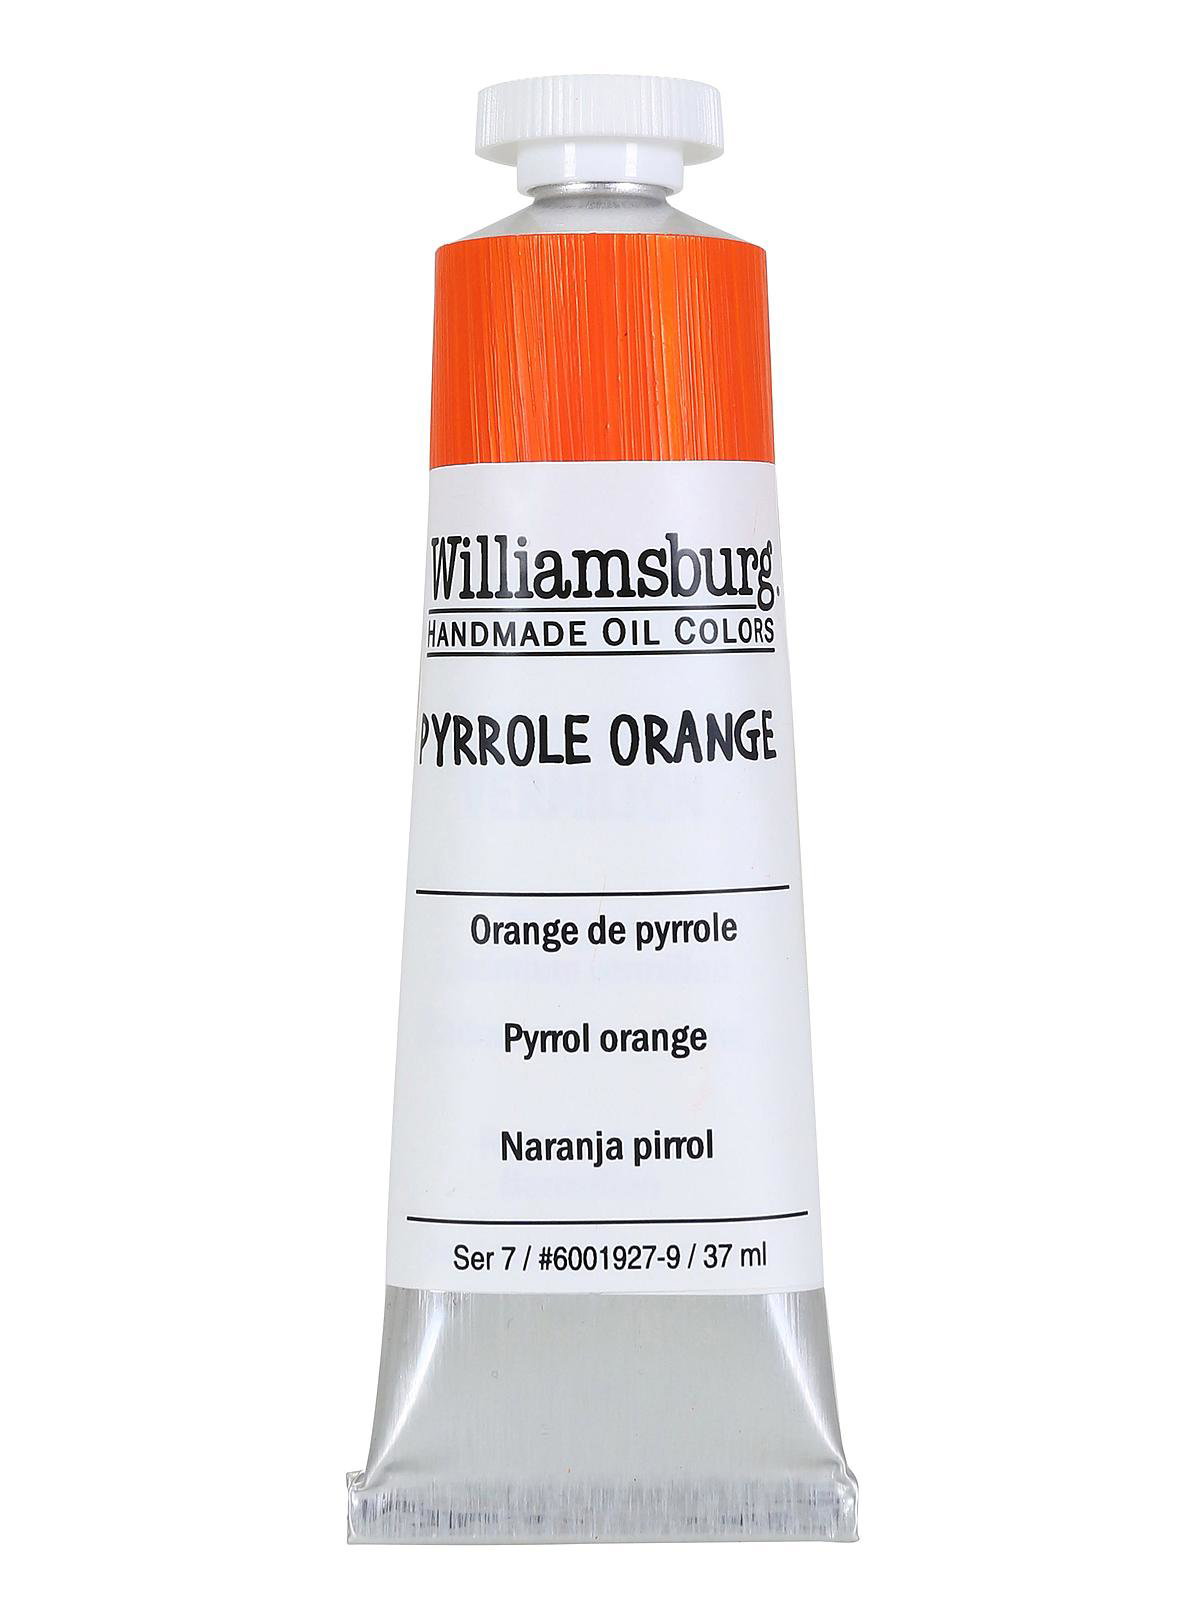 Pyrrole Orange